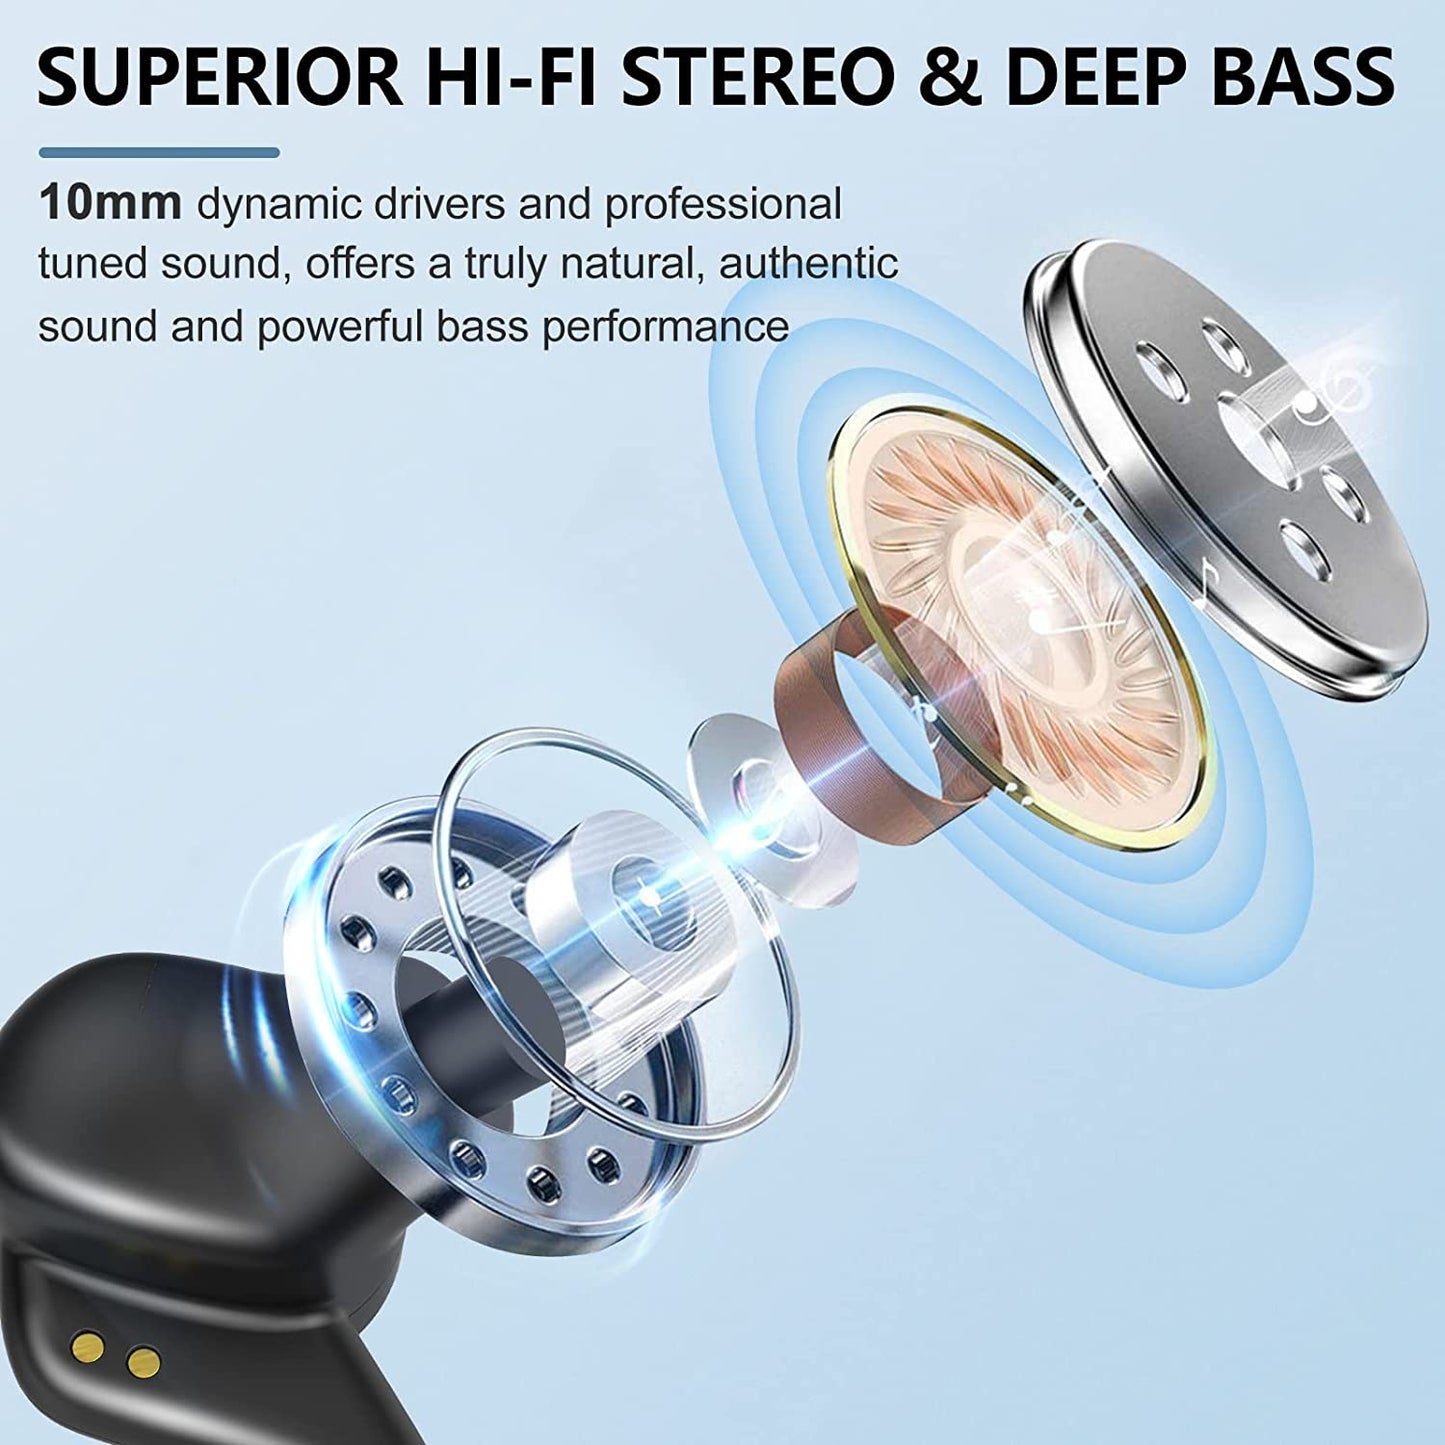 Sports Bluetooth Wireless Headphones with Mic IPX6 Waterproof Ear Hooks Bluetooth Earphones HiFi Stereo Music Earbuds for Phone